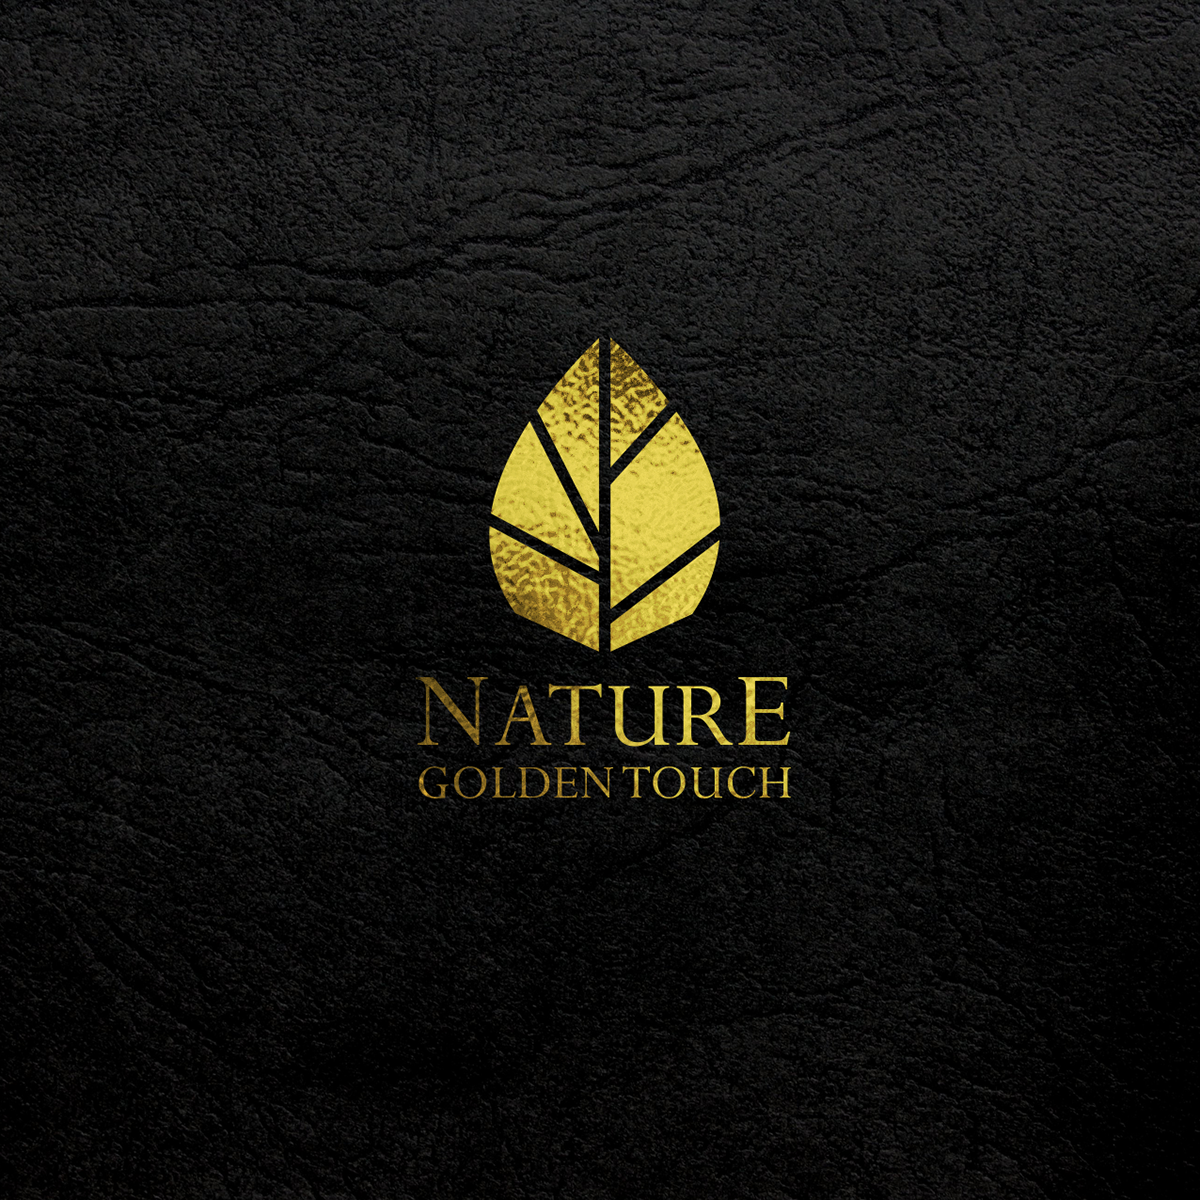 nature logo ideas 2